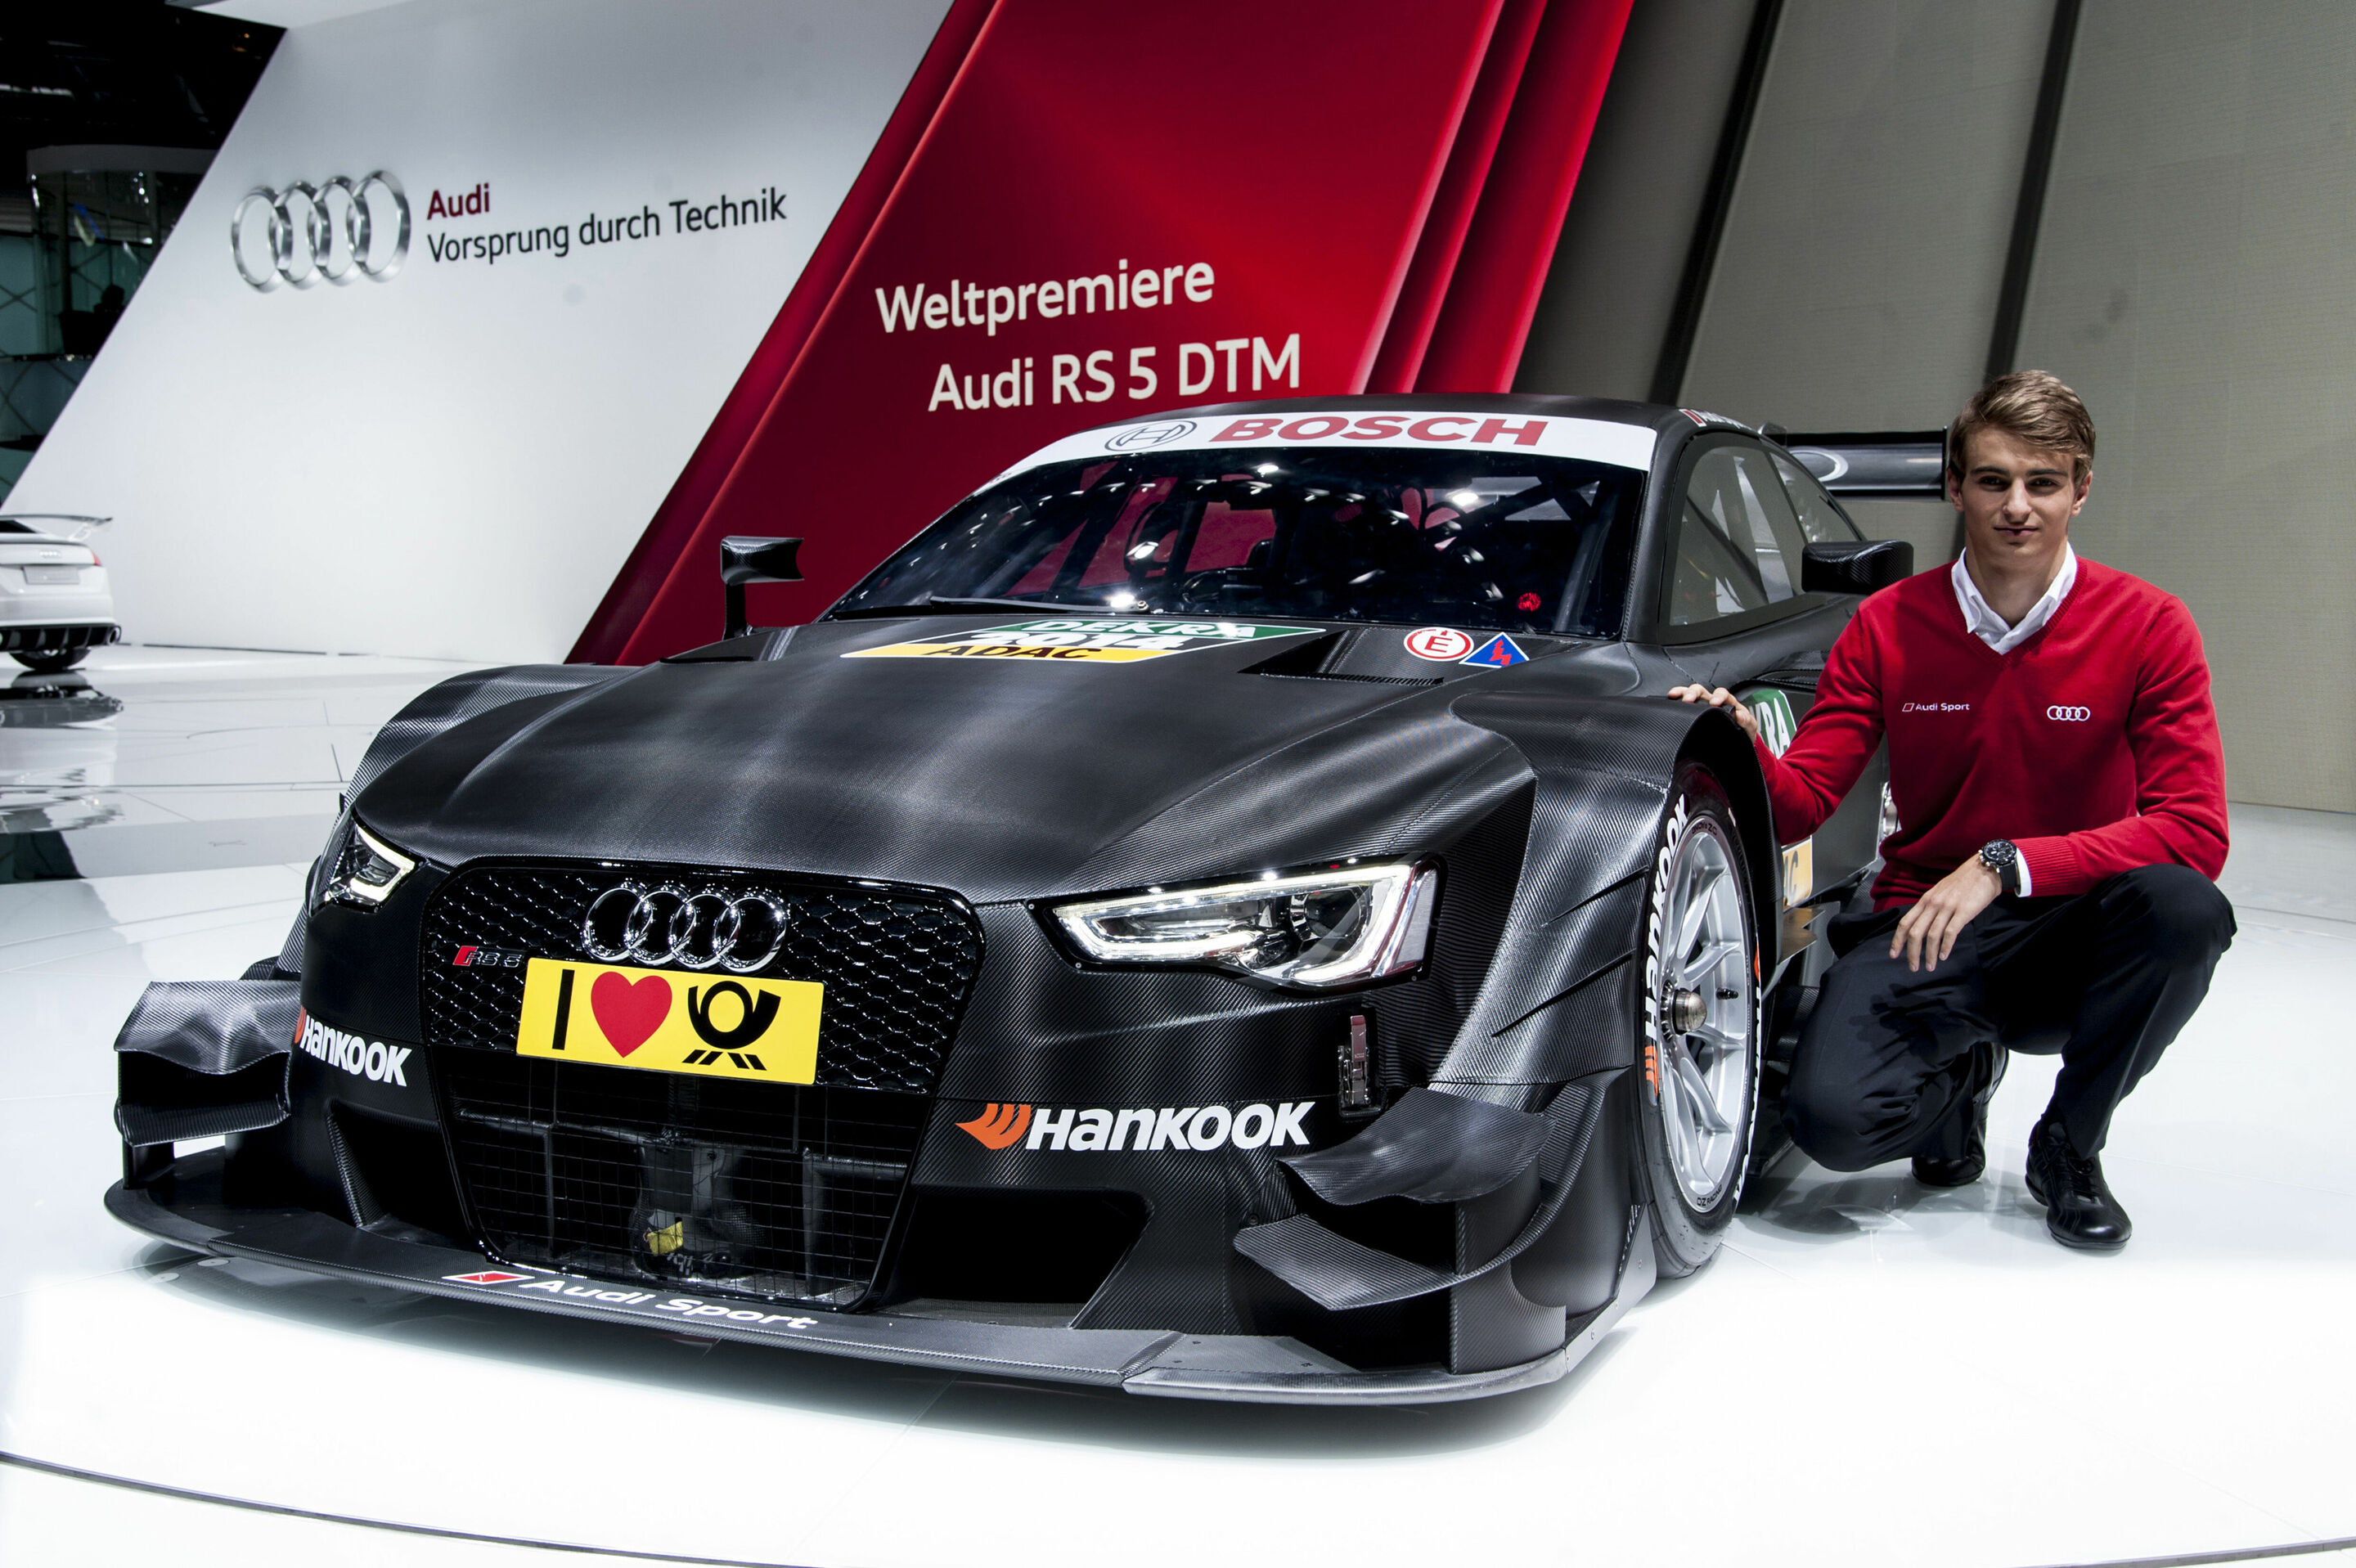 Weltpremiere des neuen Audi RS 5 DTM in Genf